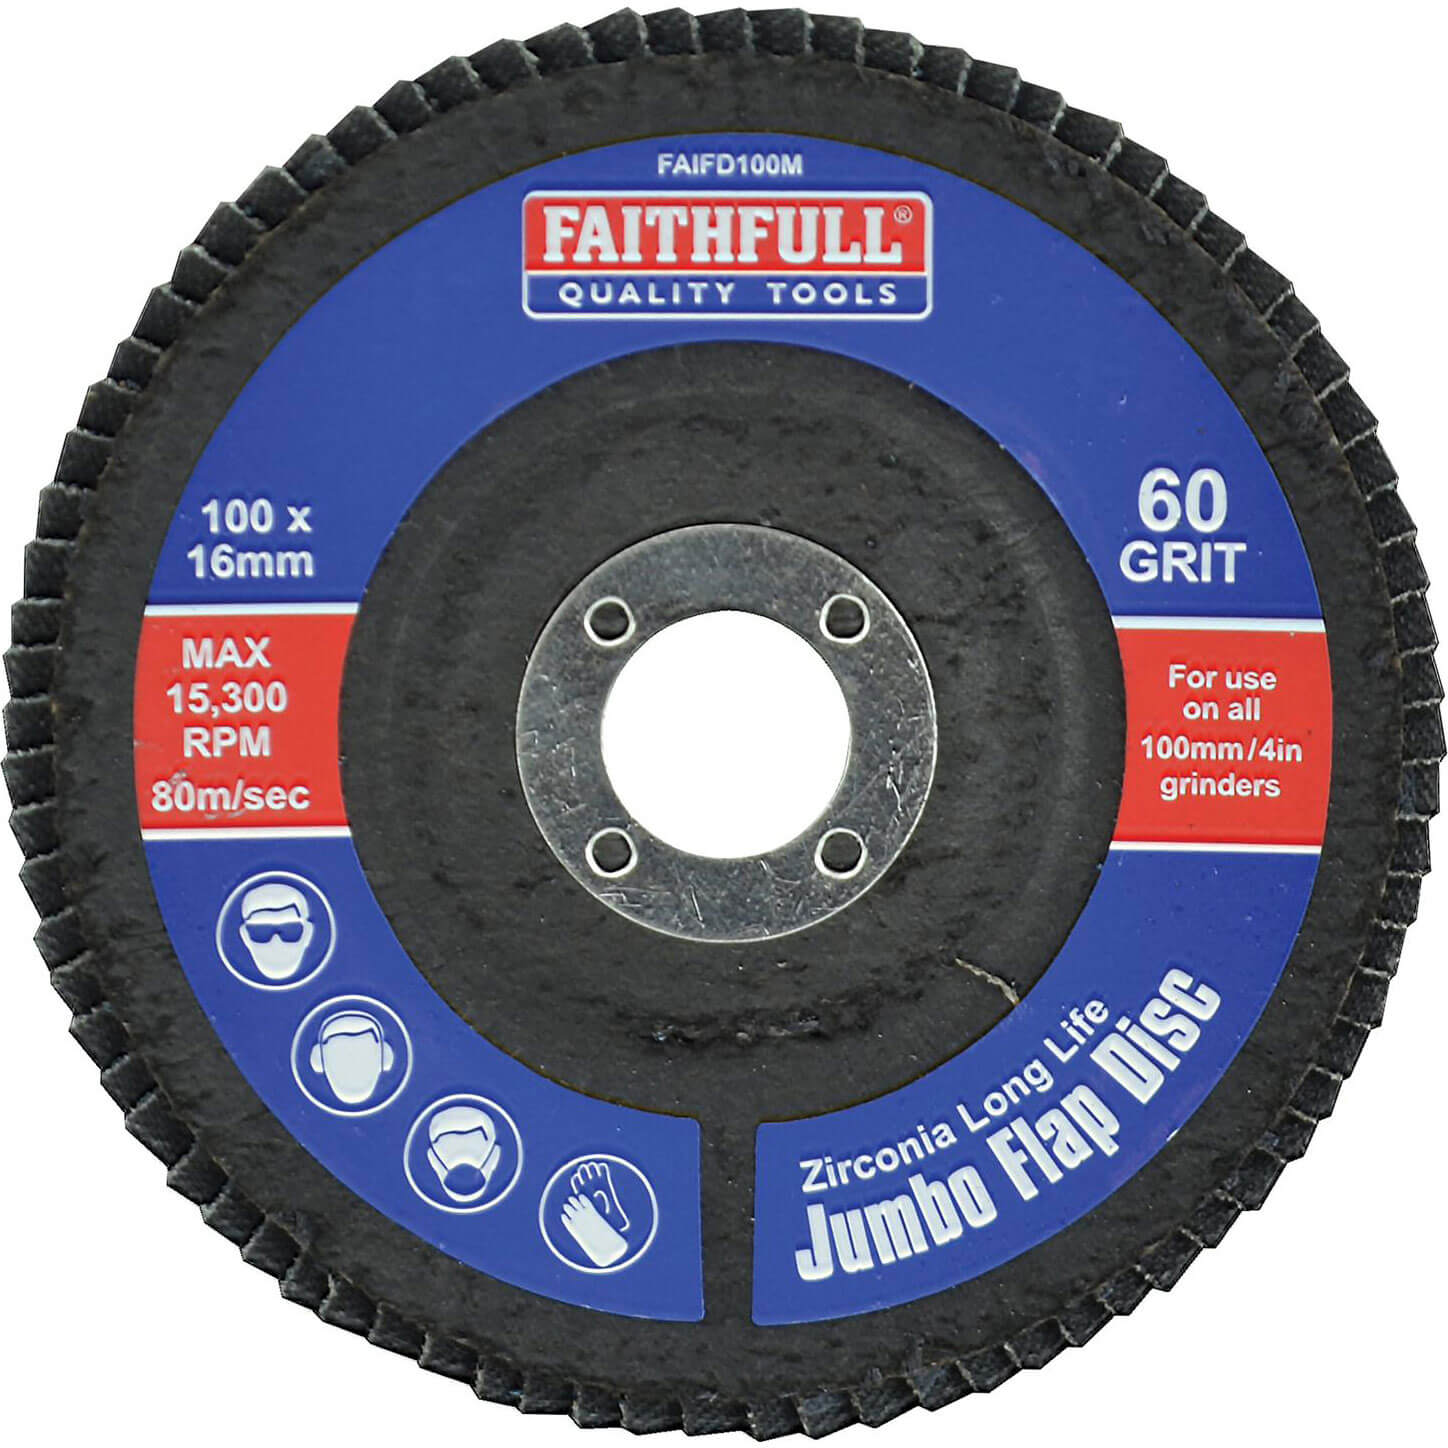 Image of Faithfull Zirconium Abrasive Flap Disc 100mm Medium